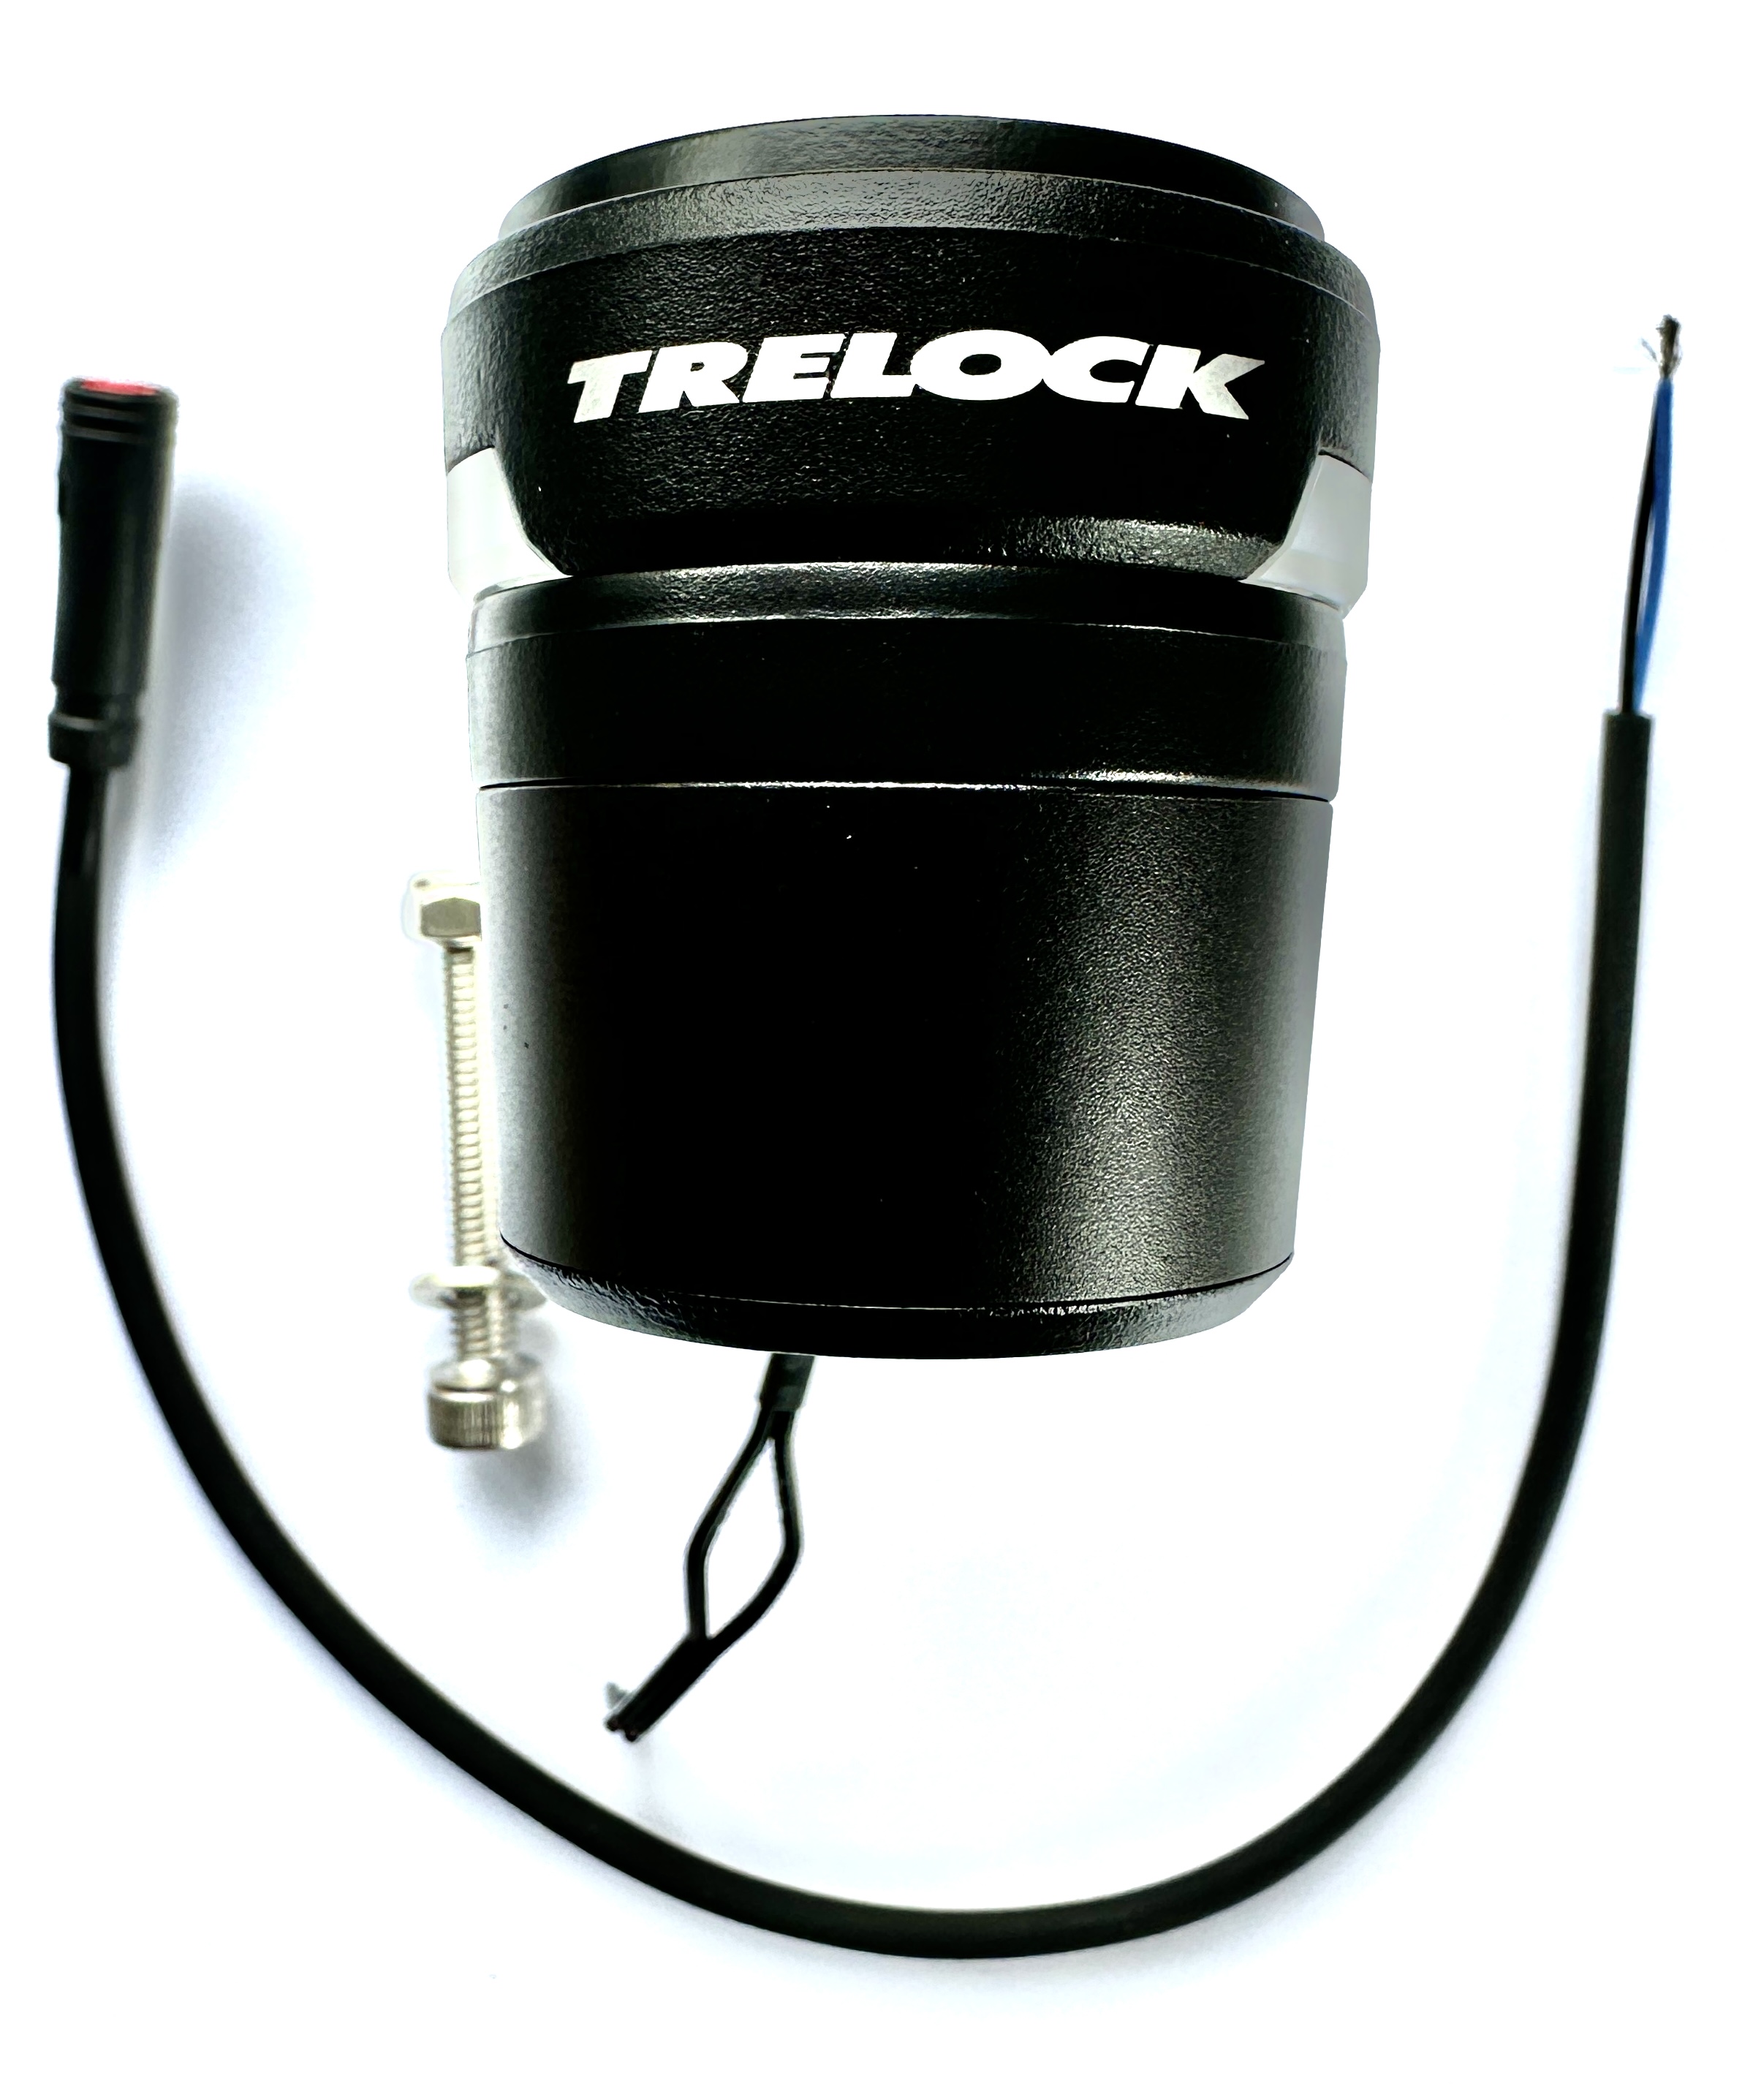 Trelock LS780 Airflow 100 LED front light for ebikes